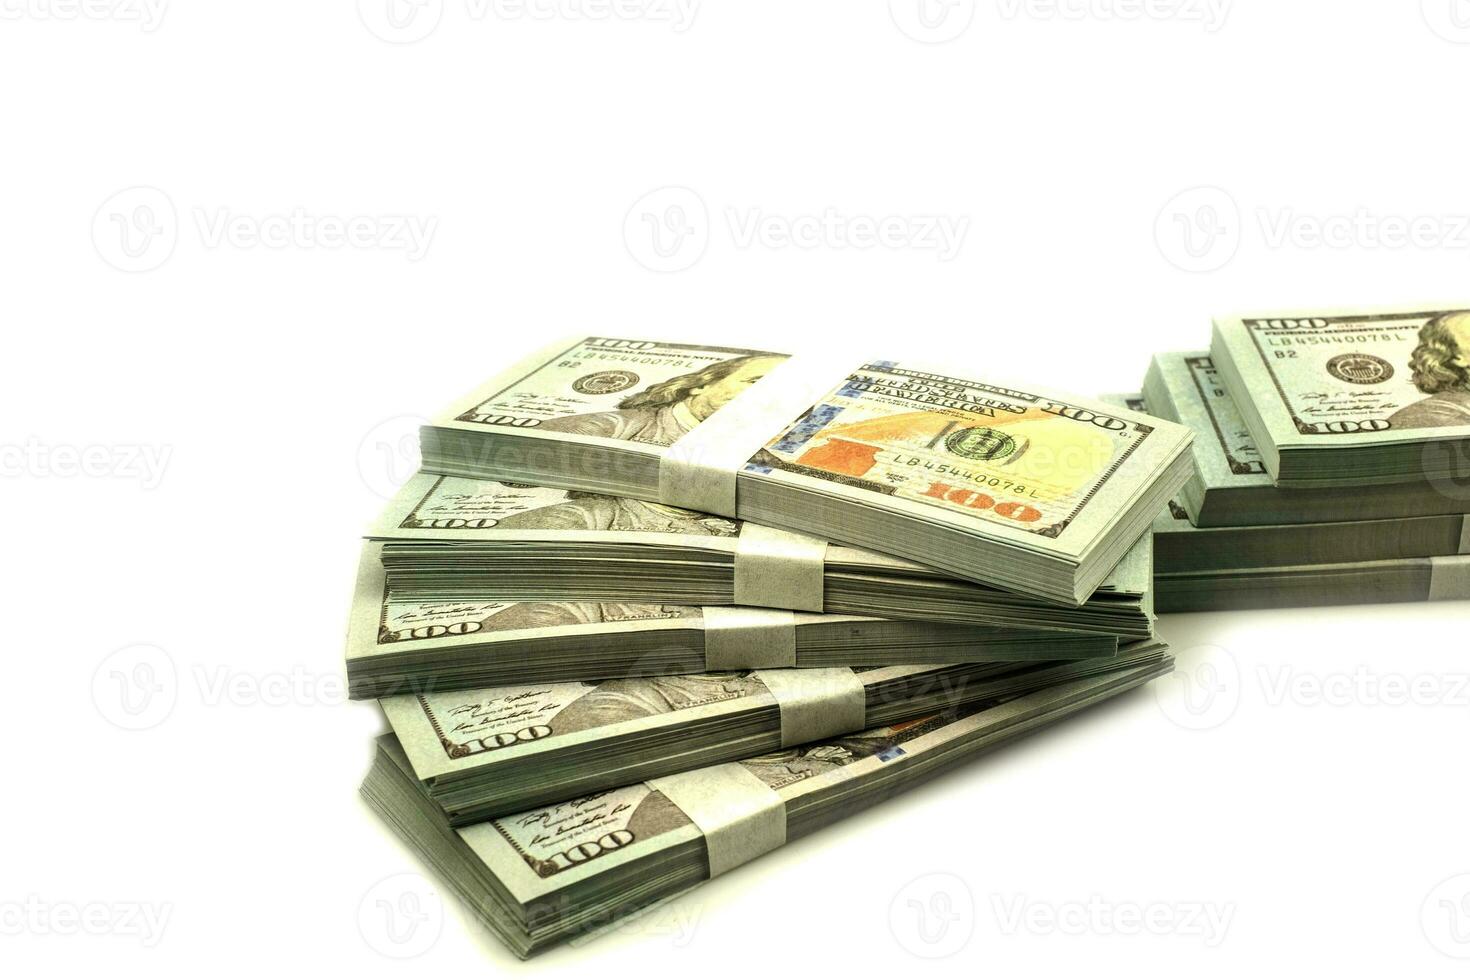 stapel bundels van 100 Amerikaanse dollars bankbiljetten op witte achtergrond foto